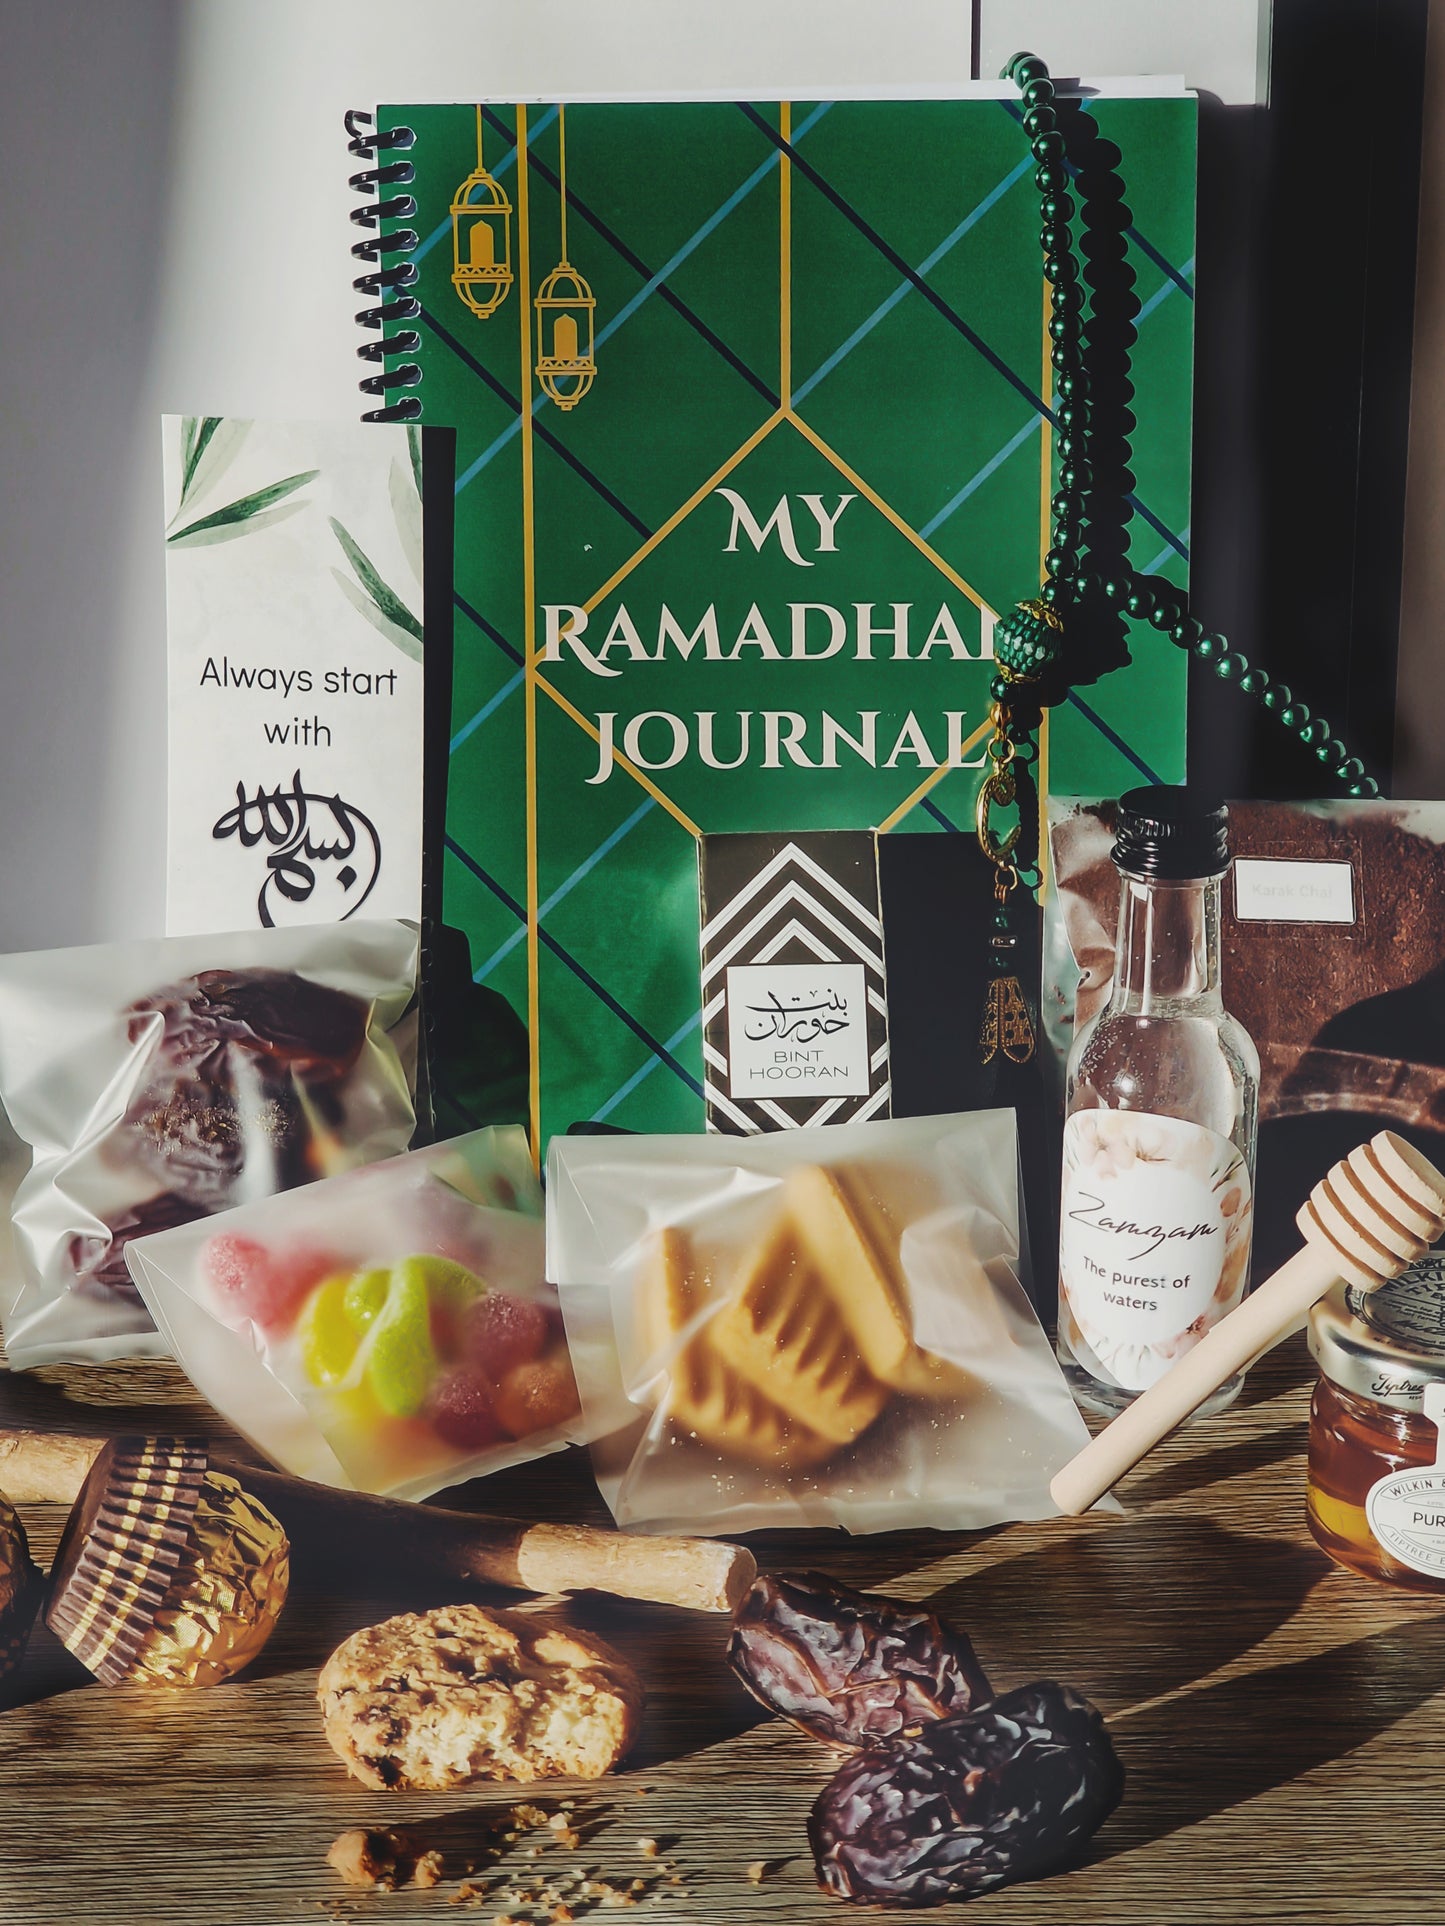 My Ramadhan Journal